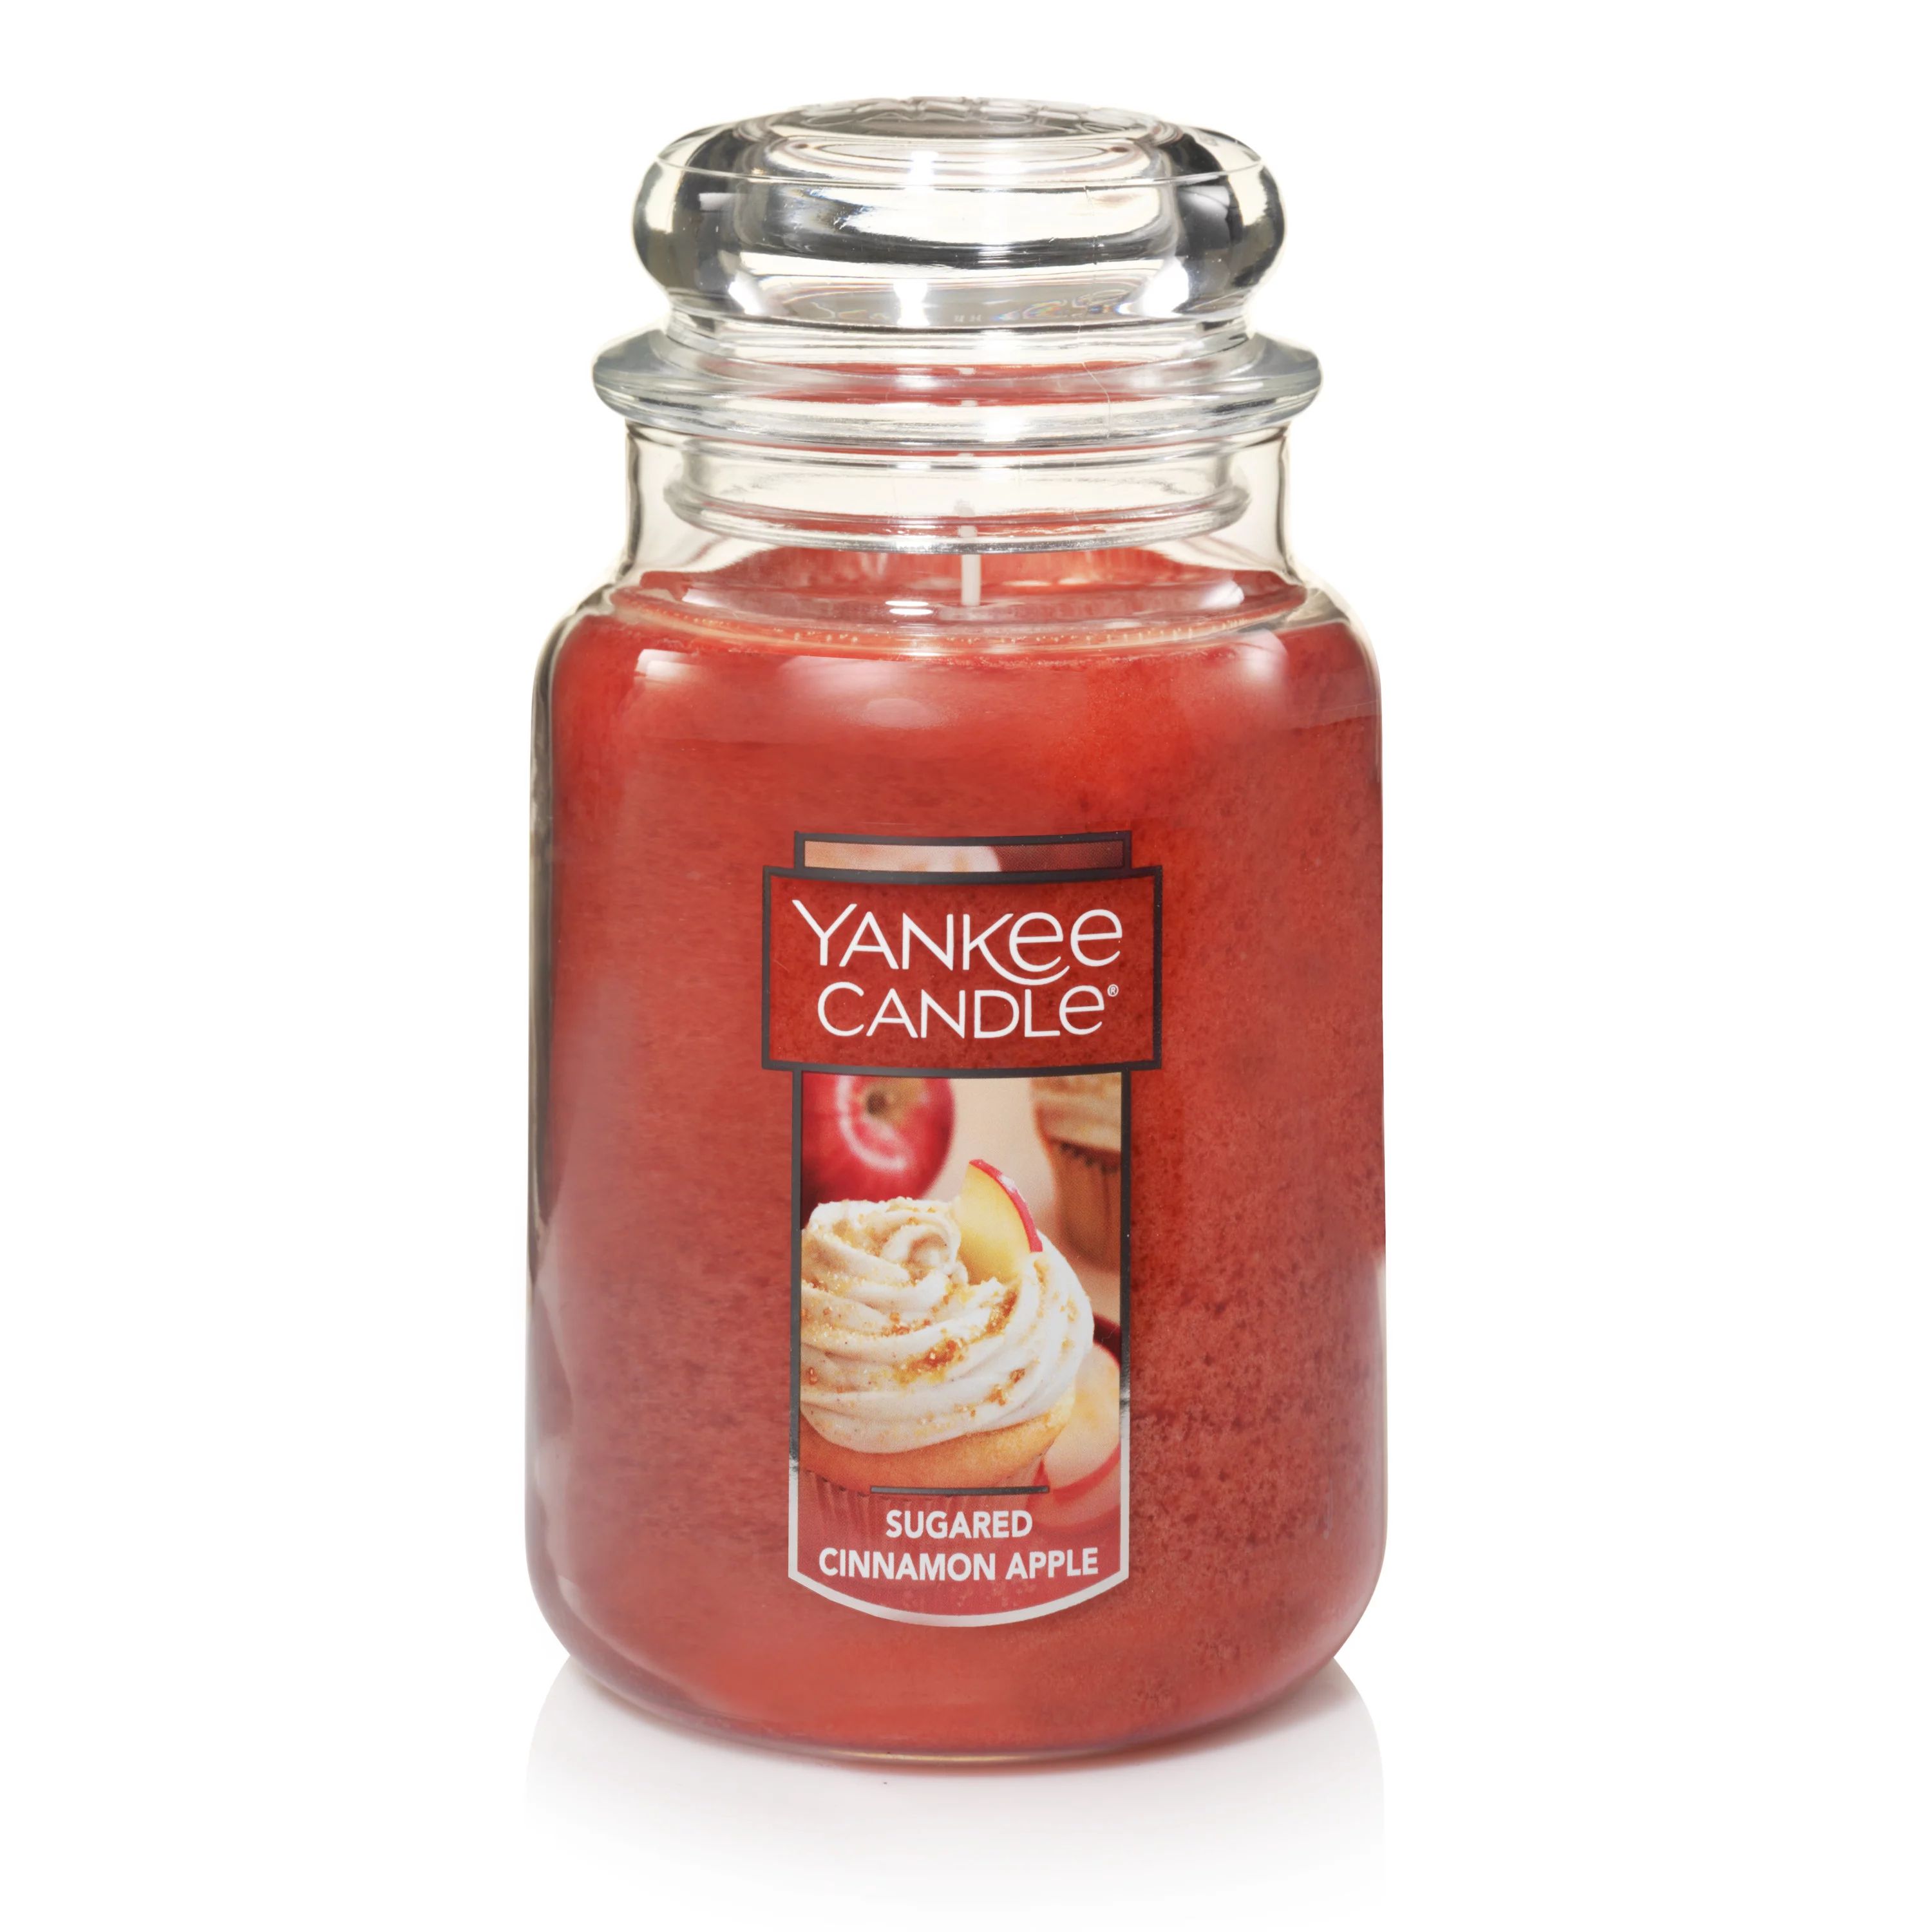 Yankee Candle Sugared Cinnamon Apple - Large Jar Candle | Walmart (US)